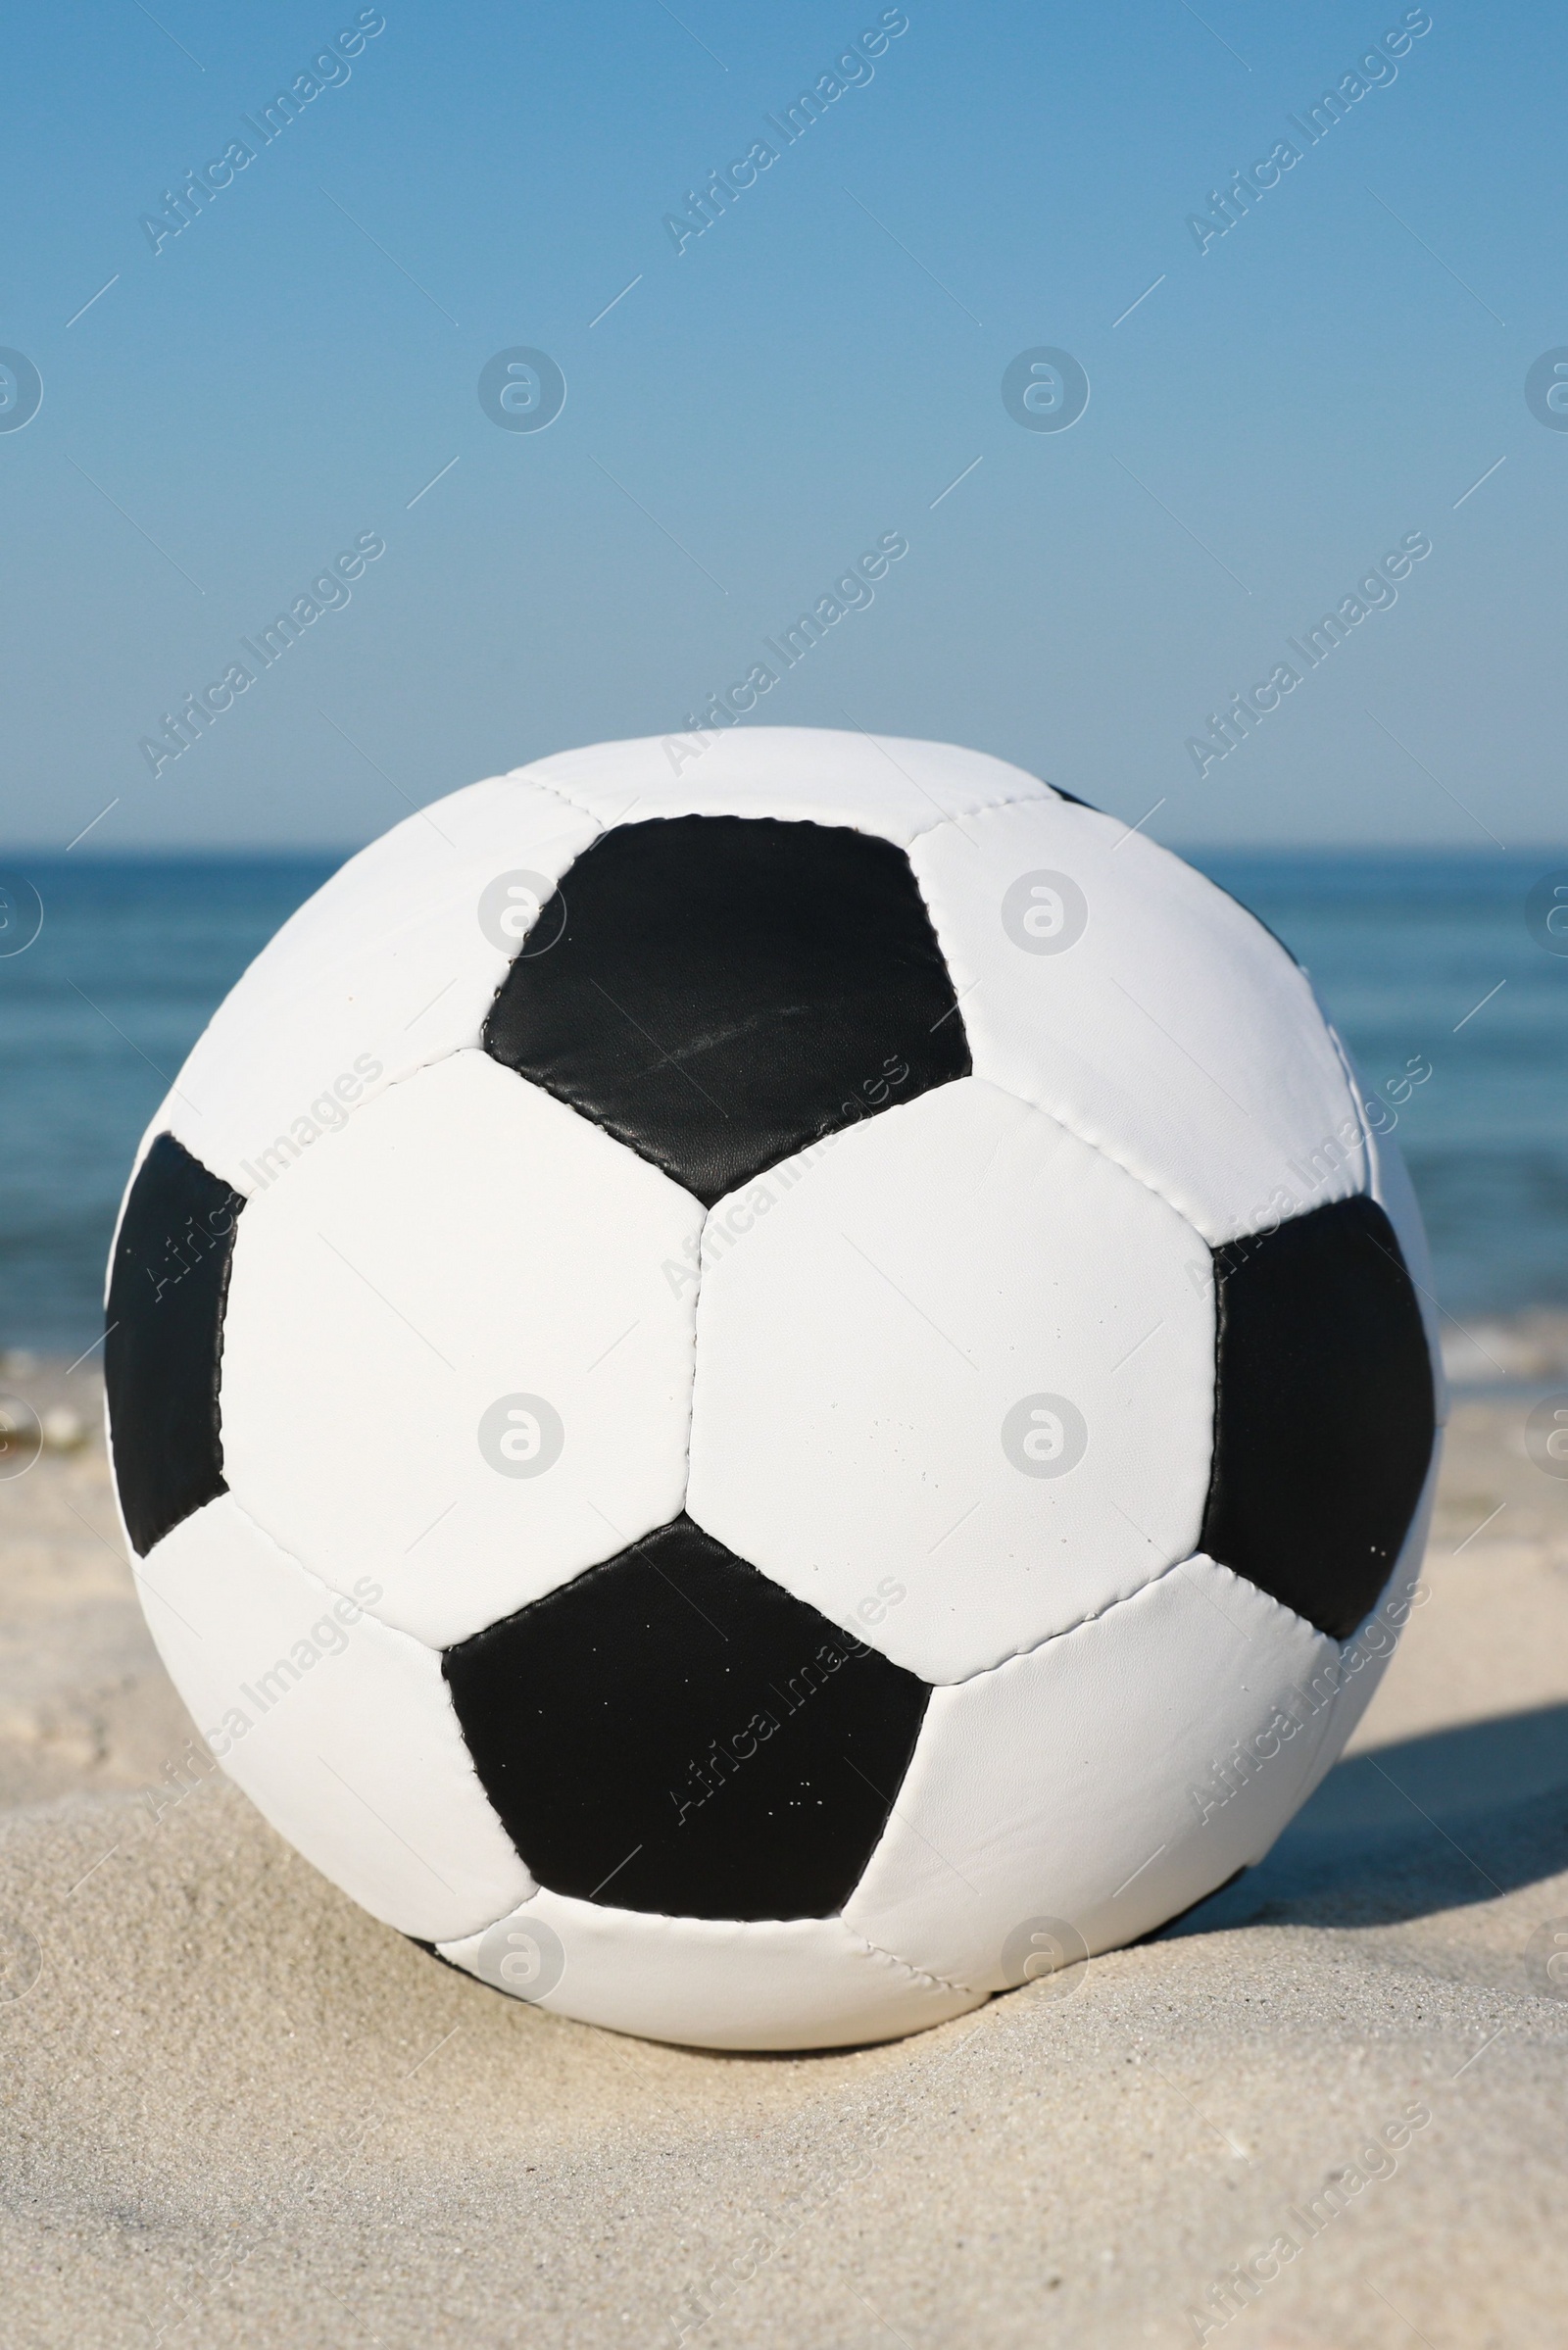 Photo of Soccer ball on beach near sea. Football equipment